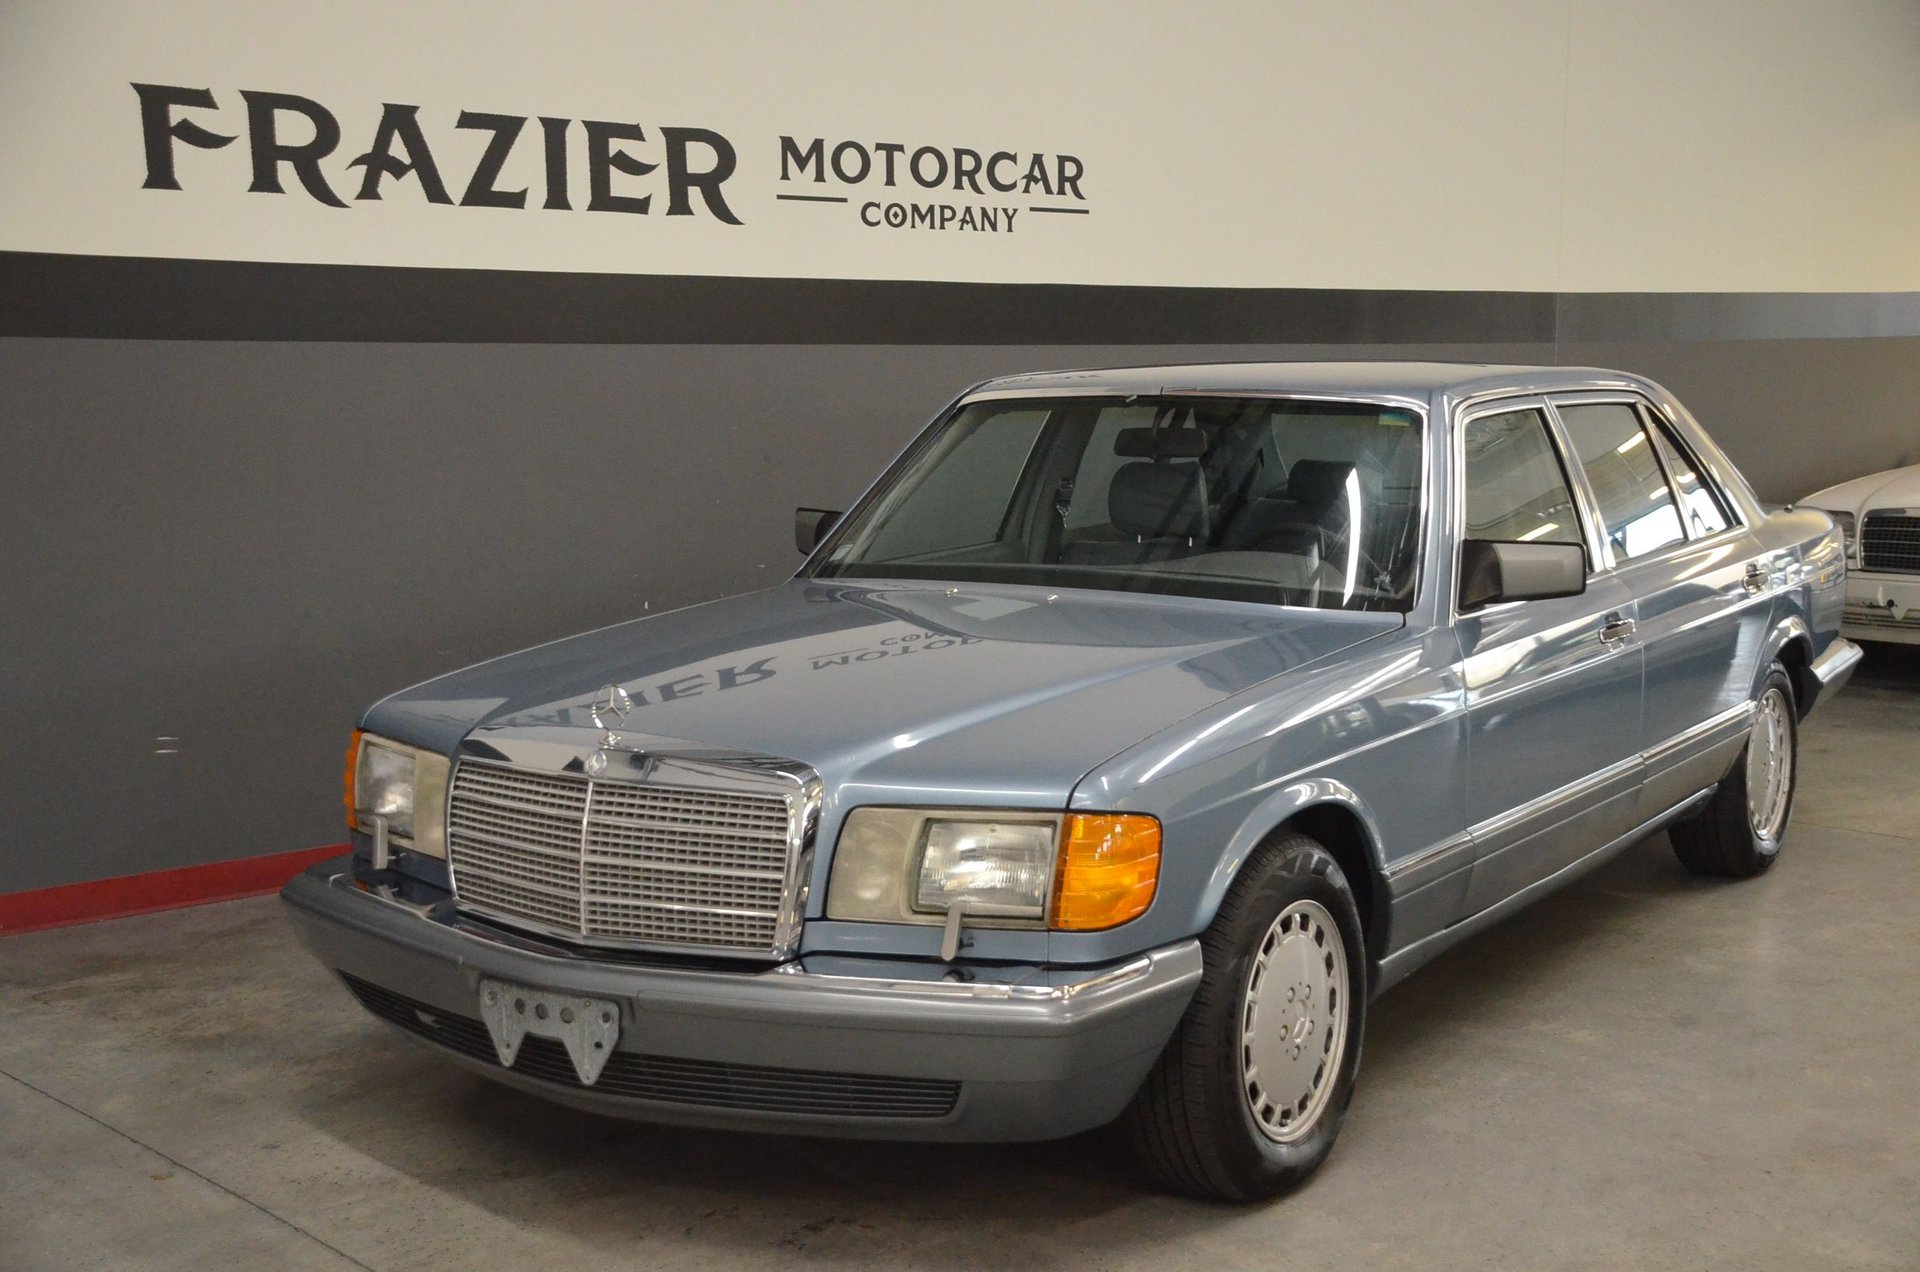 1987 Mercedes-Benz 420 SEL | Frazier Motorcar Company